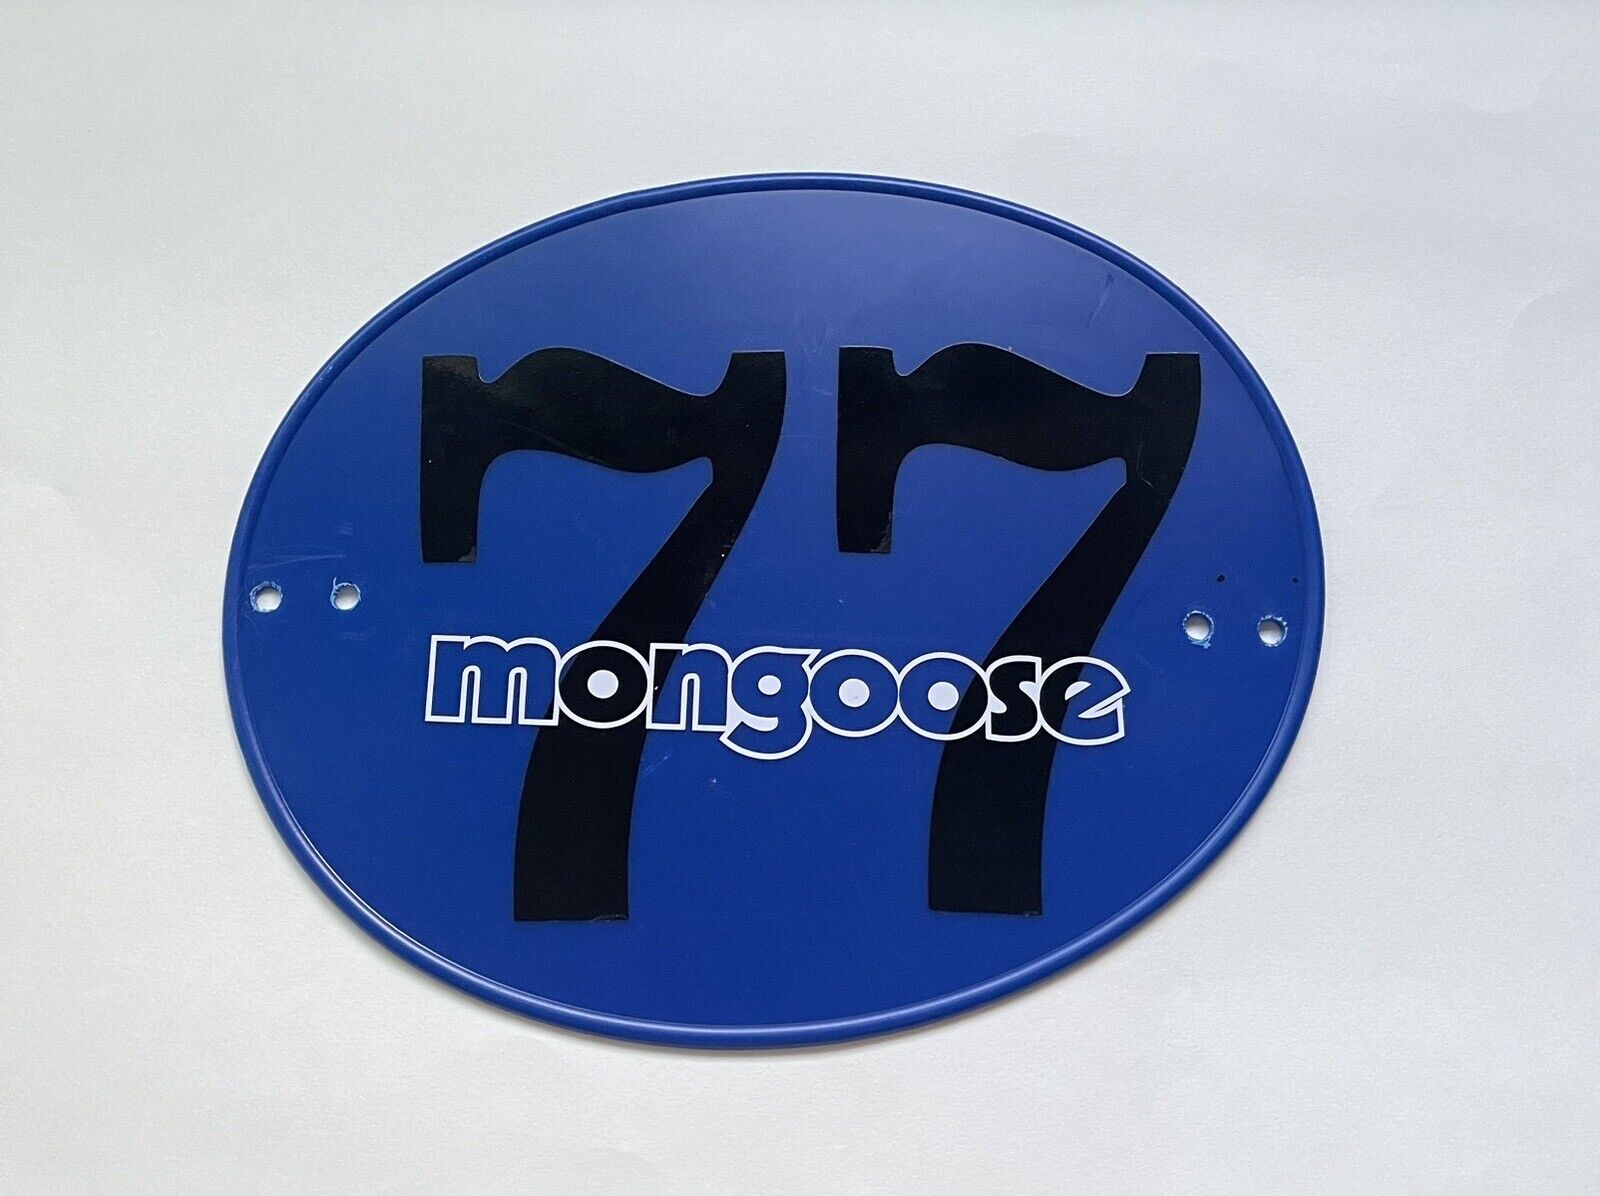 Mongoose Bmx Number Plate